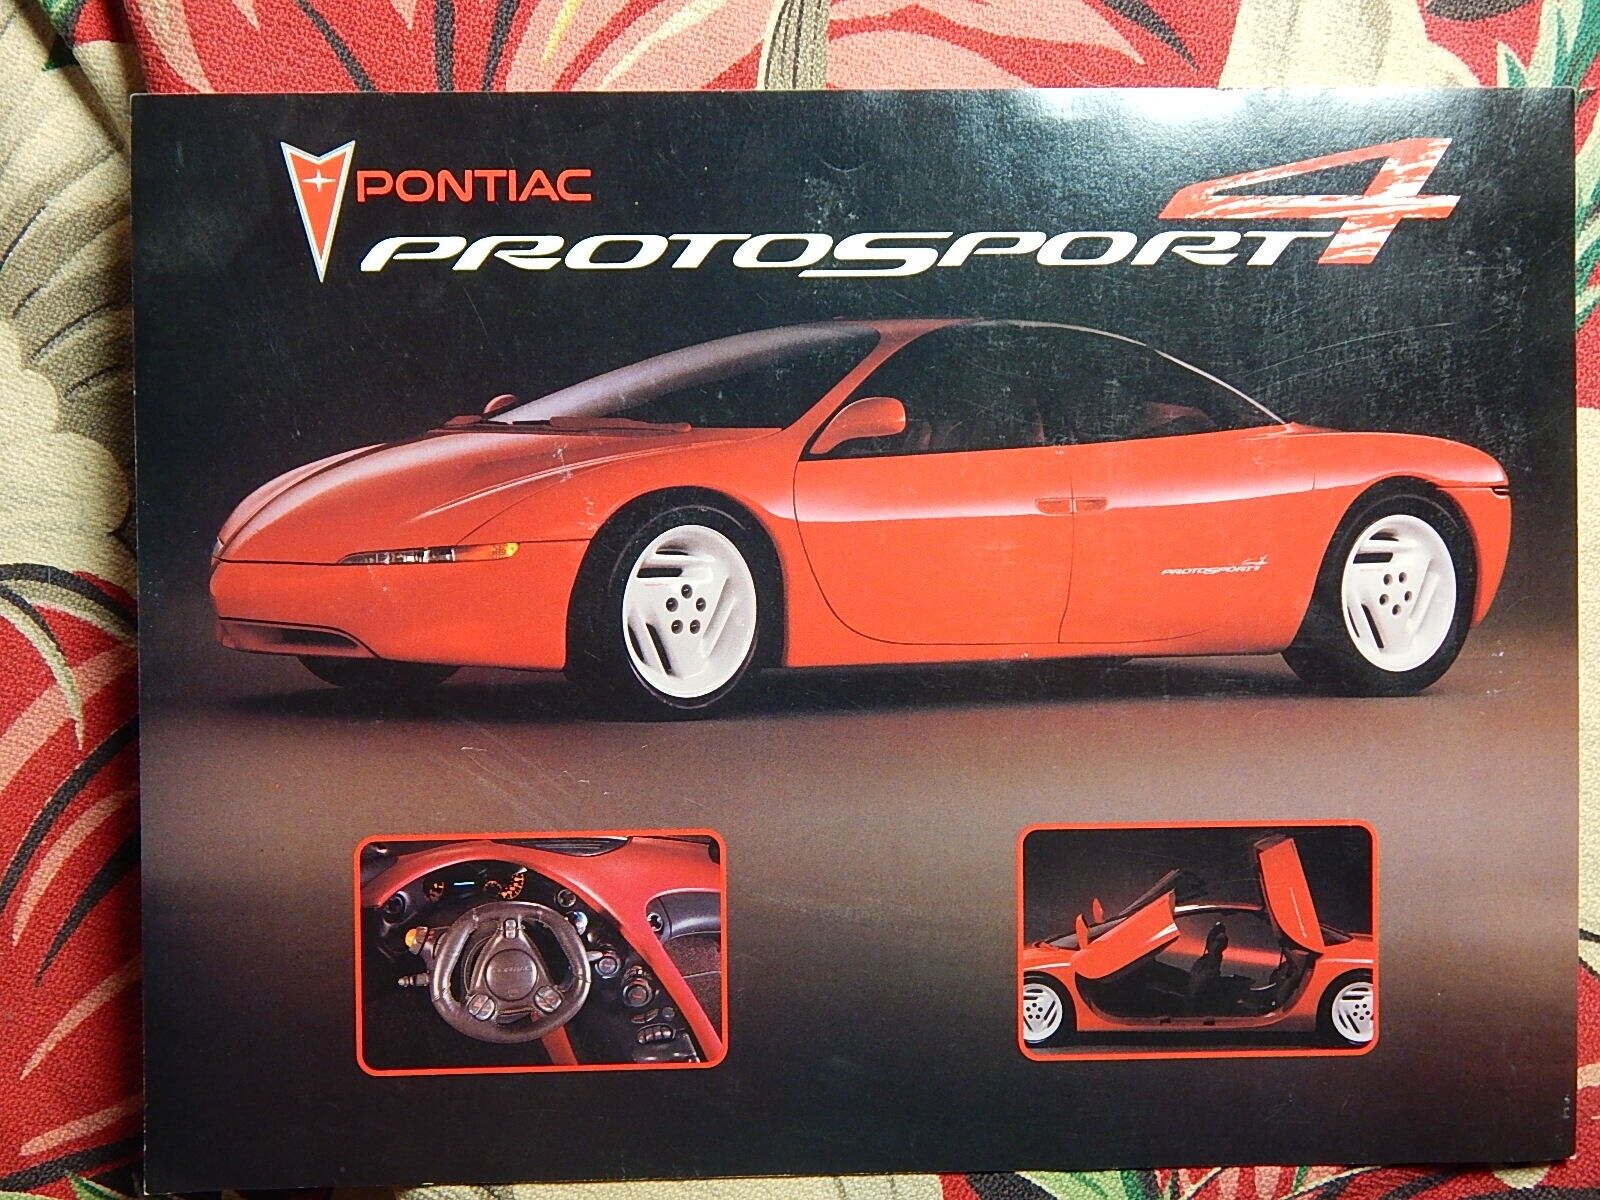 1991 Pontiac Protosport4 Concept Original 1-page Car Brochure Leaflet Data Card